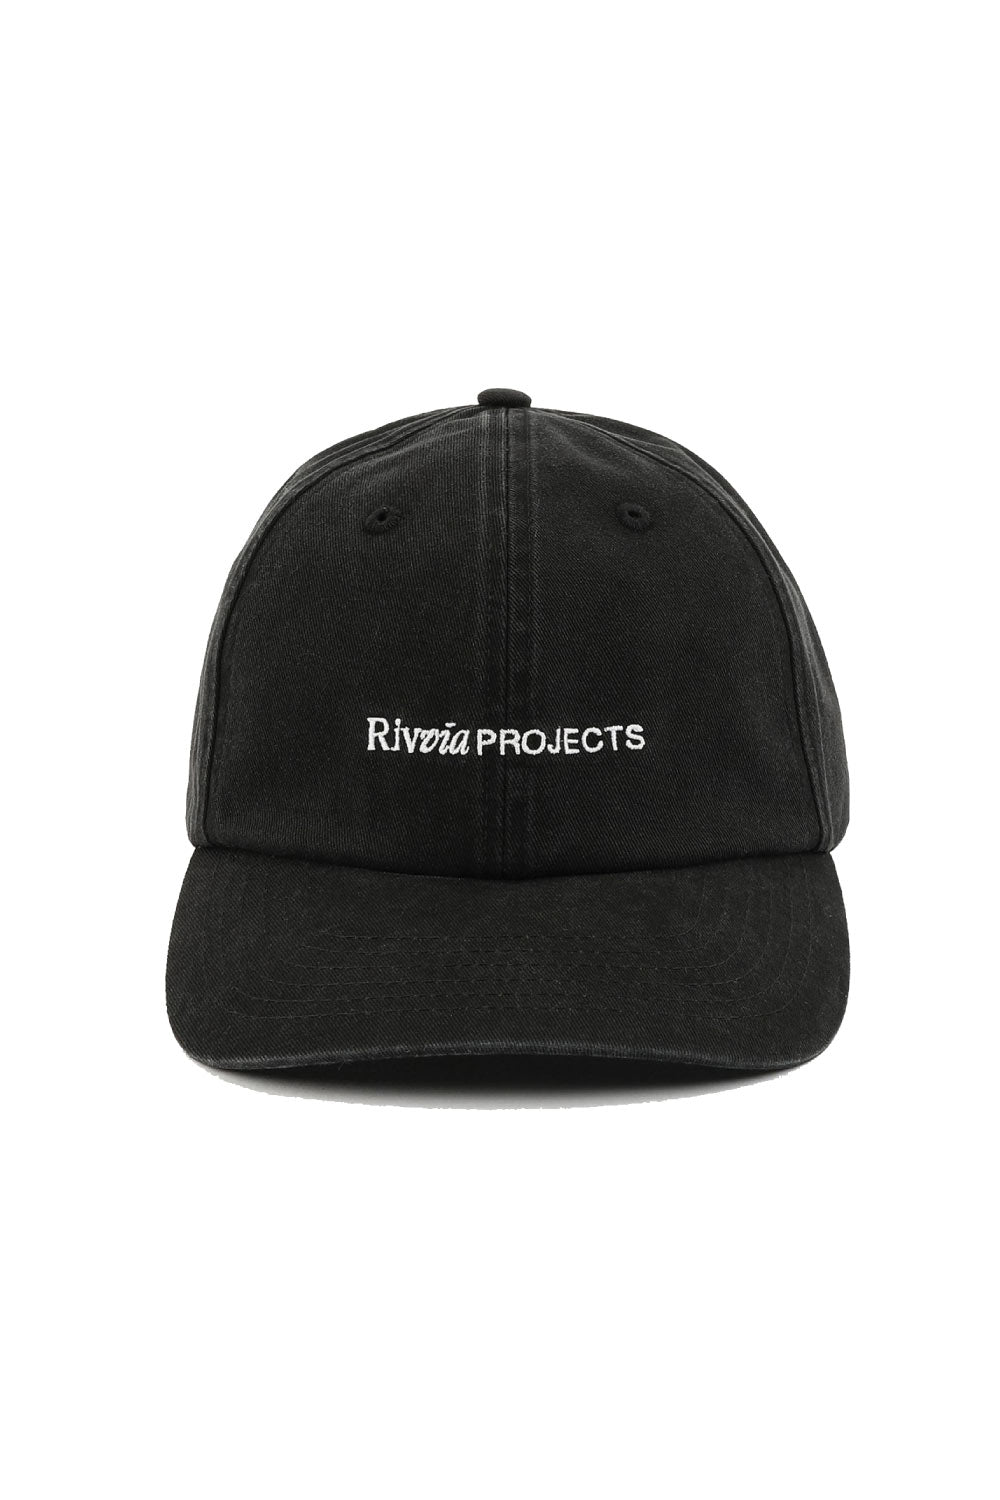 Rivvia Projects Projecting Cap